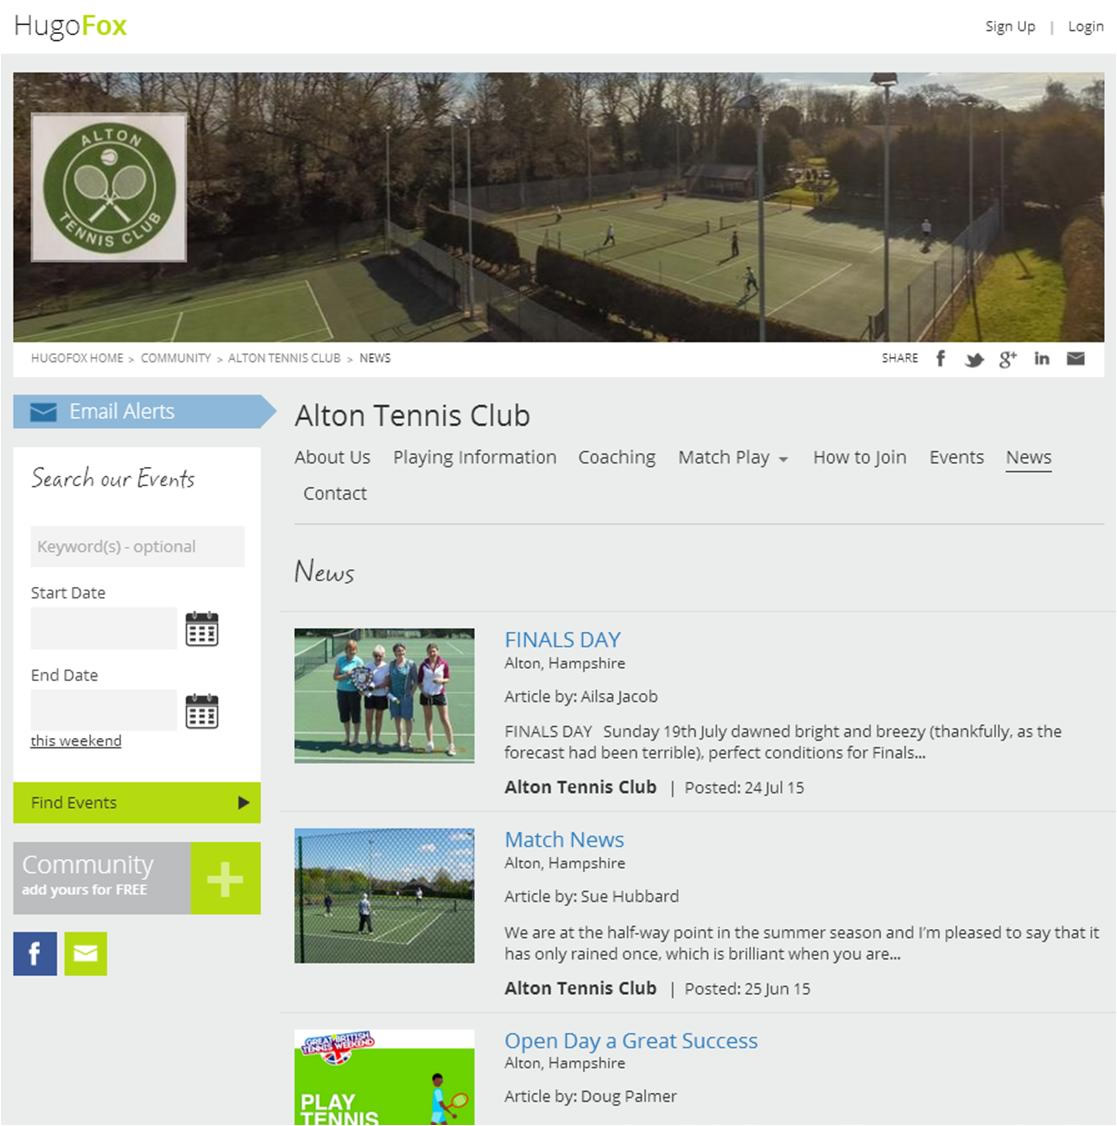 Figure 16: Alton Tennis Club - News